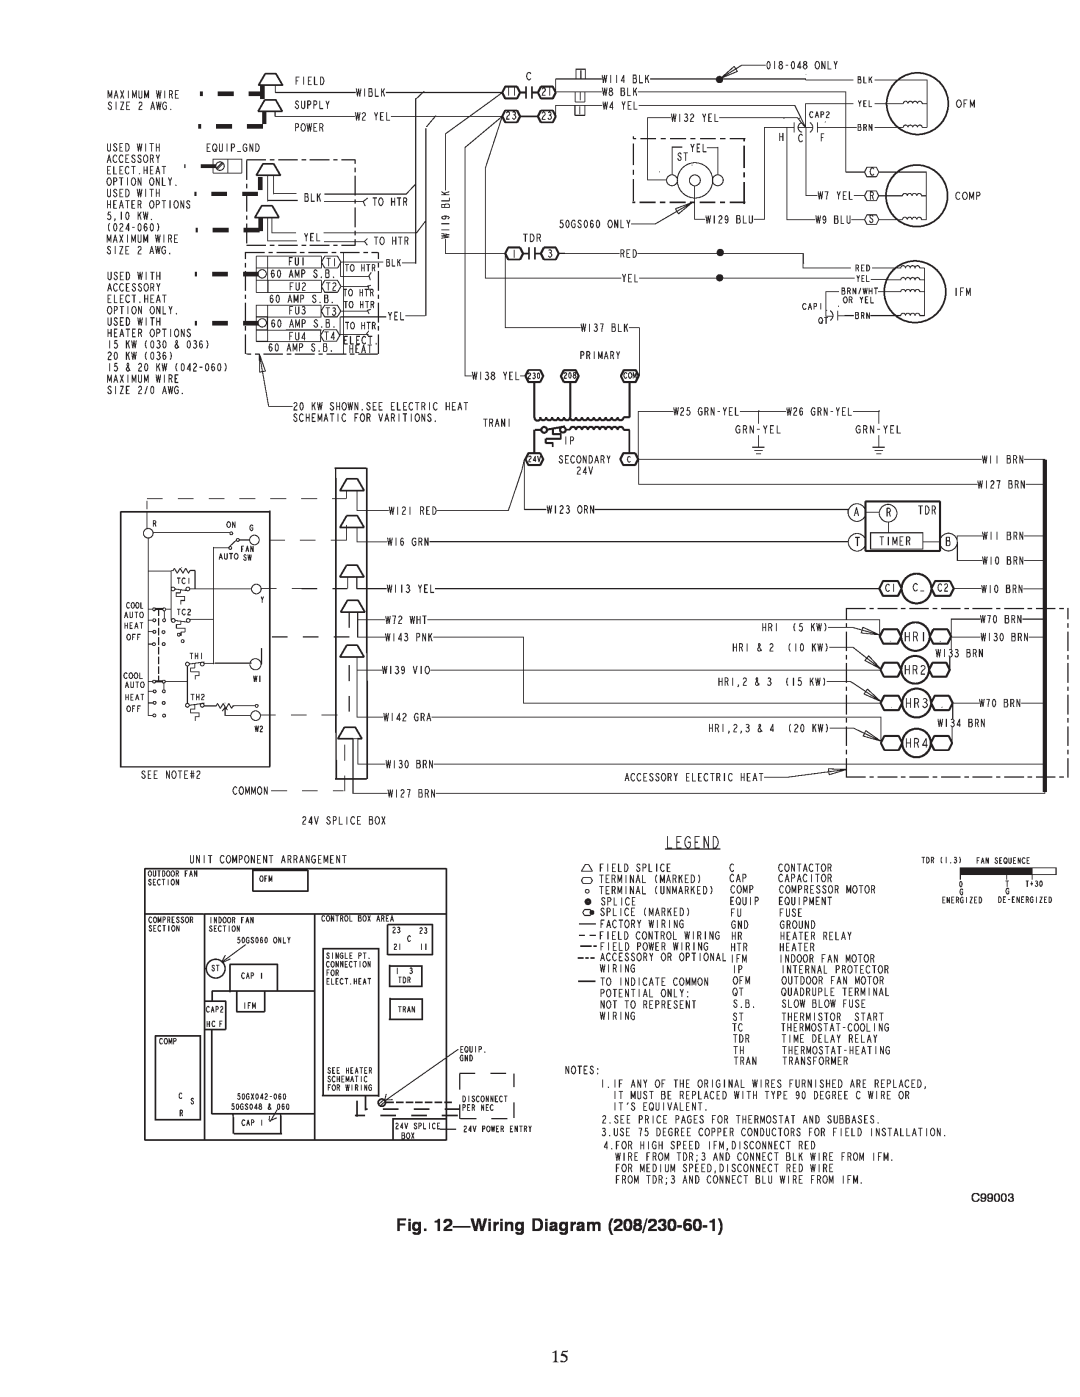 Carrier 50GX, 50GS instruction manual WiringDiagram 208/230-60-1, C99003 